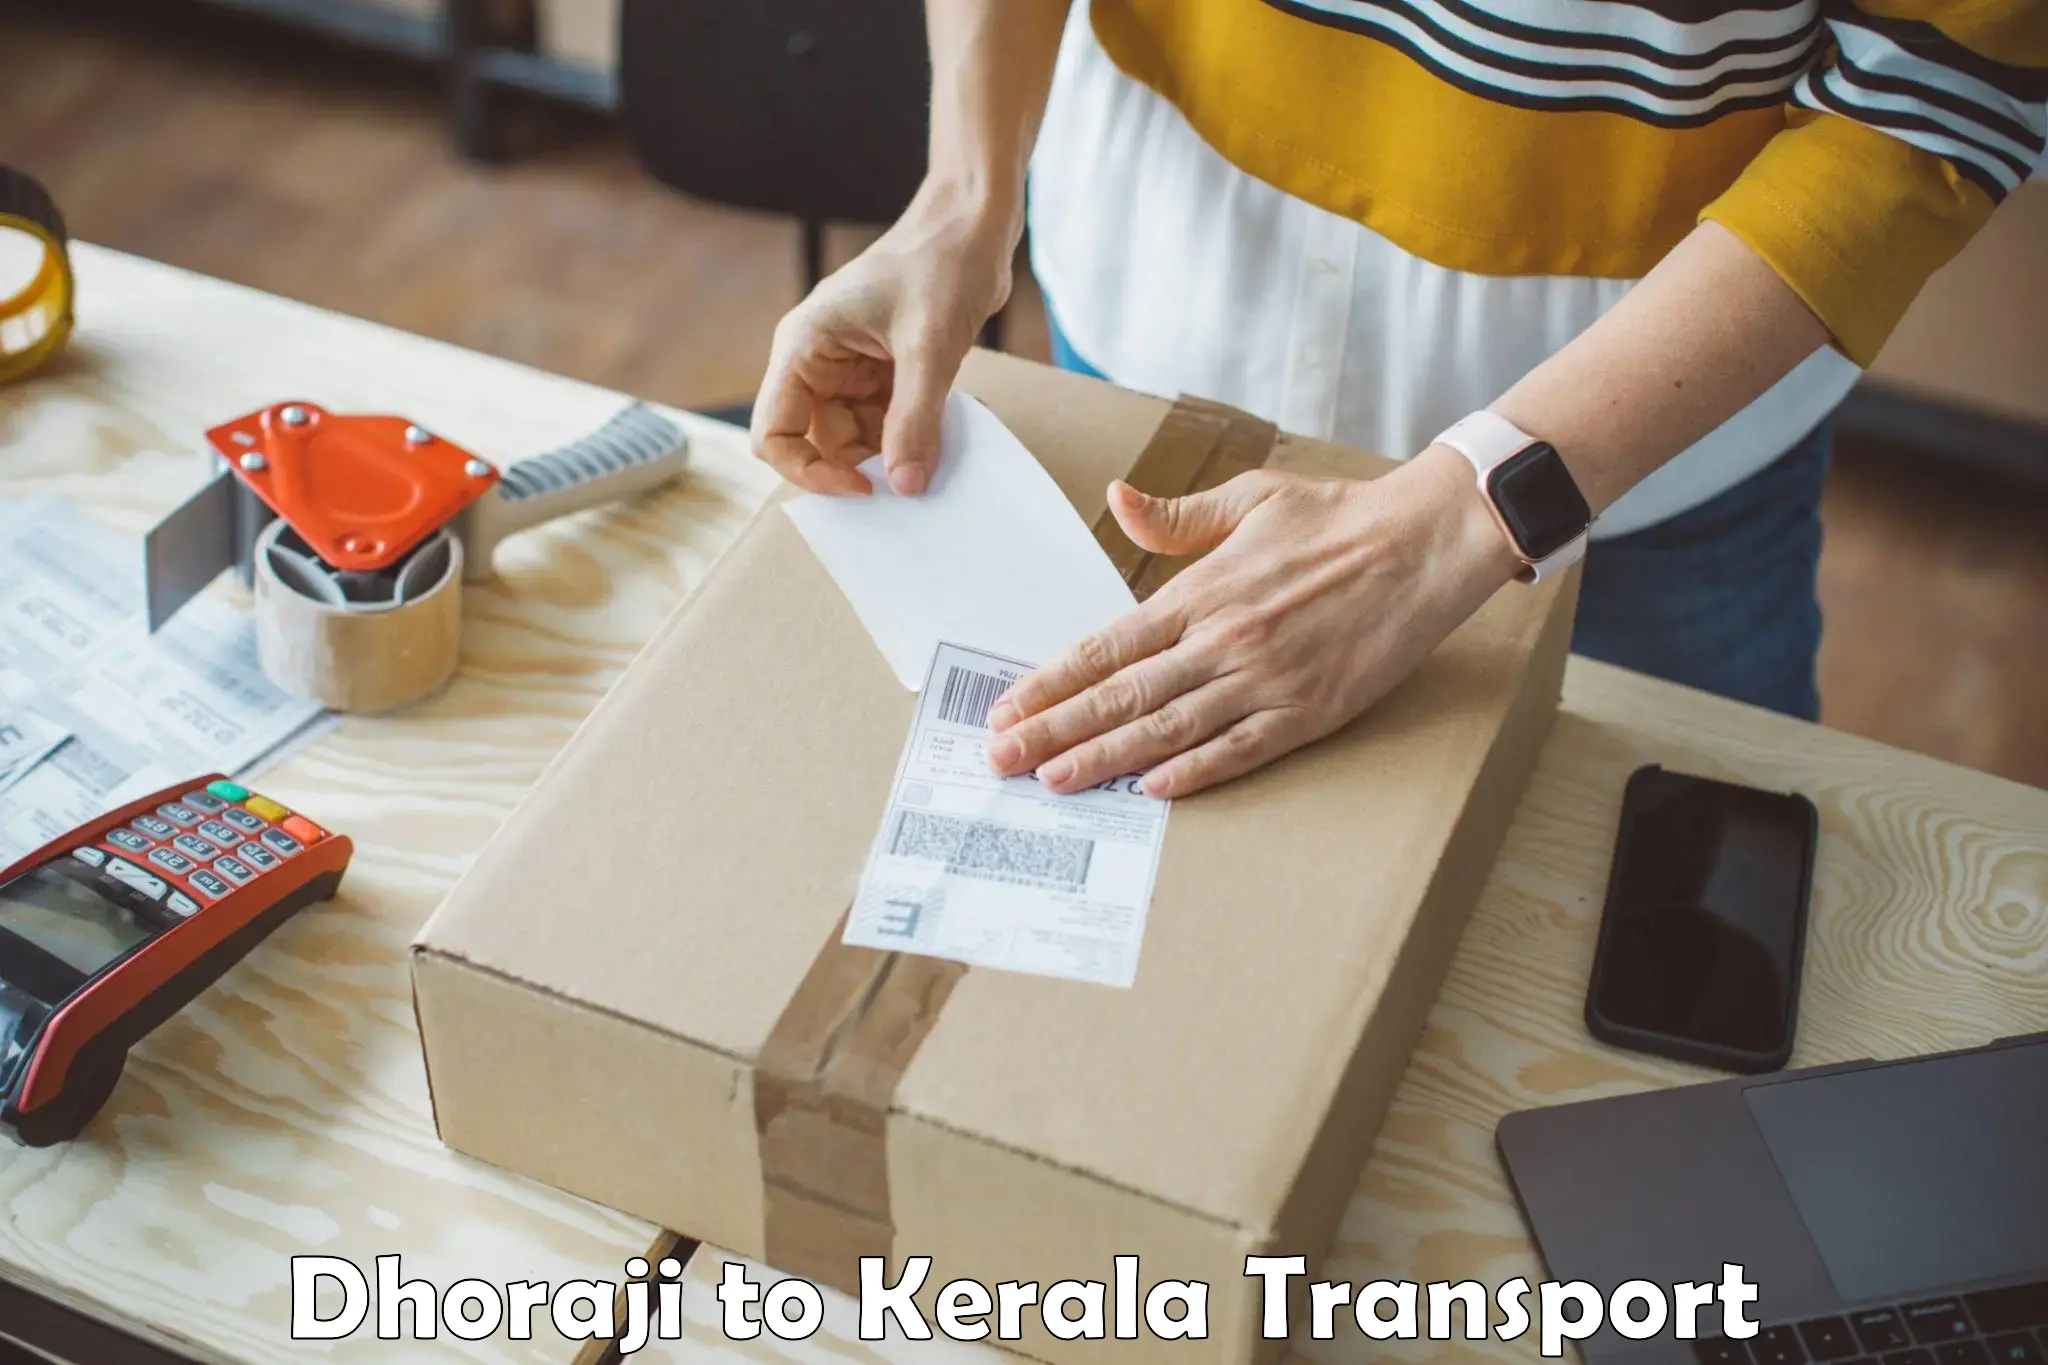 Furniture transport service Dhoraji to Kallikkad